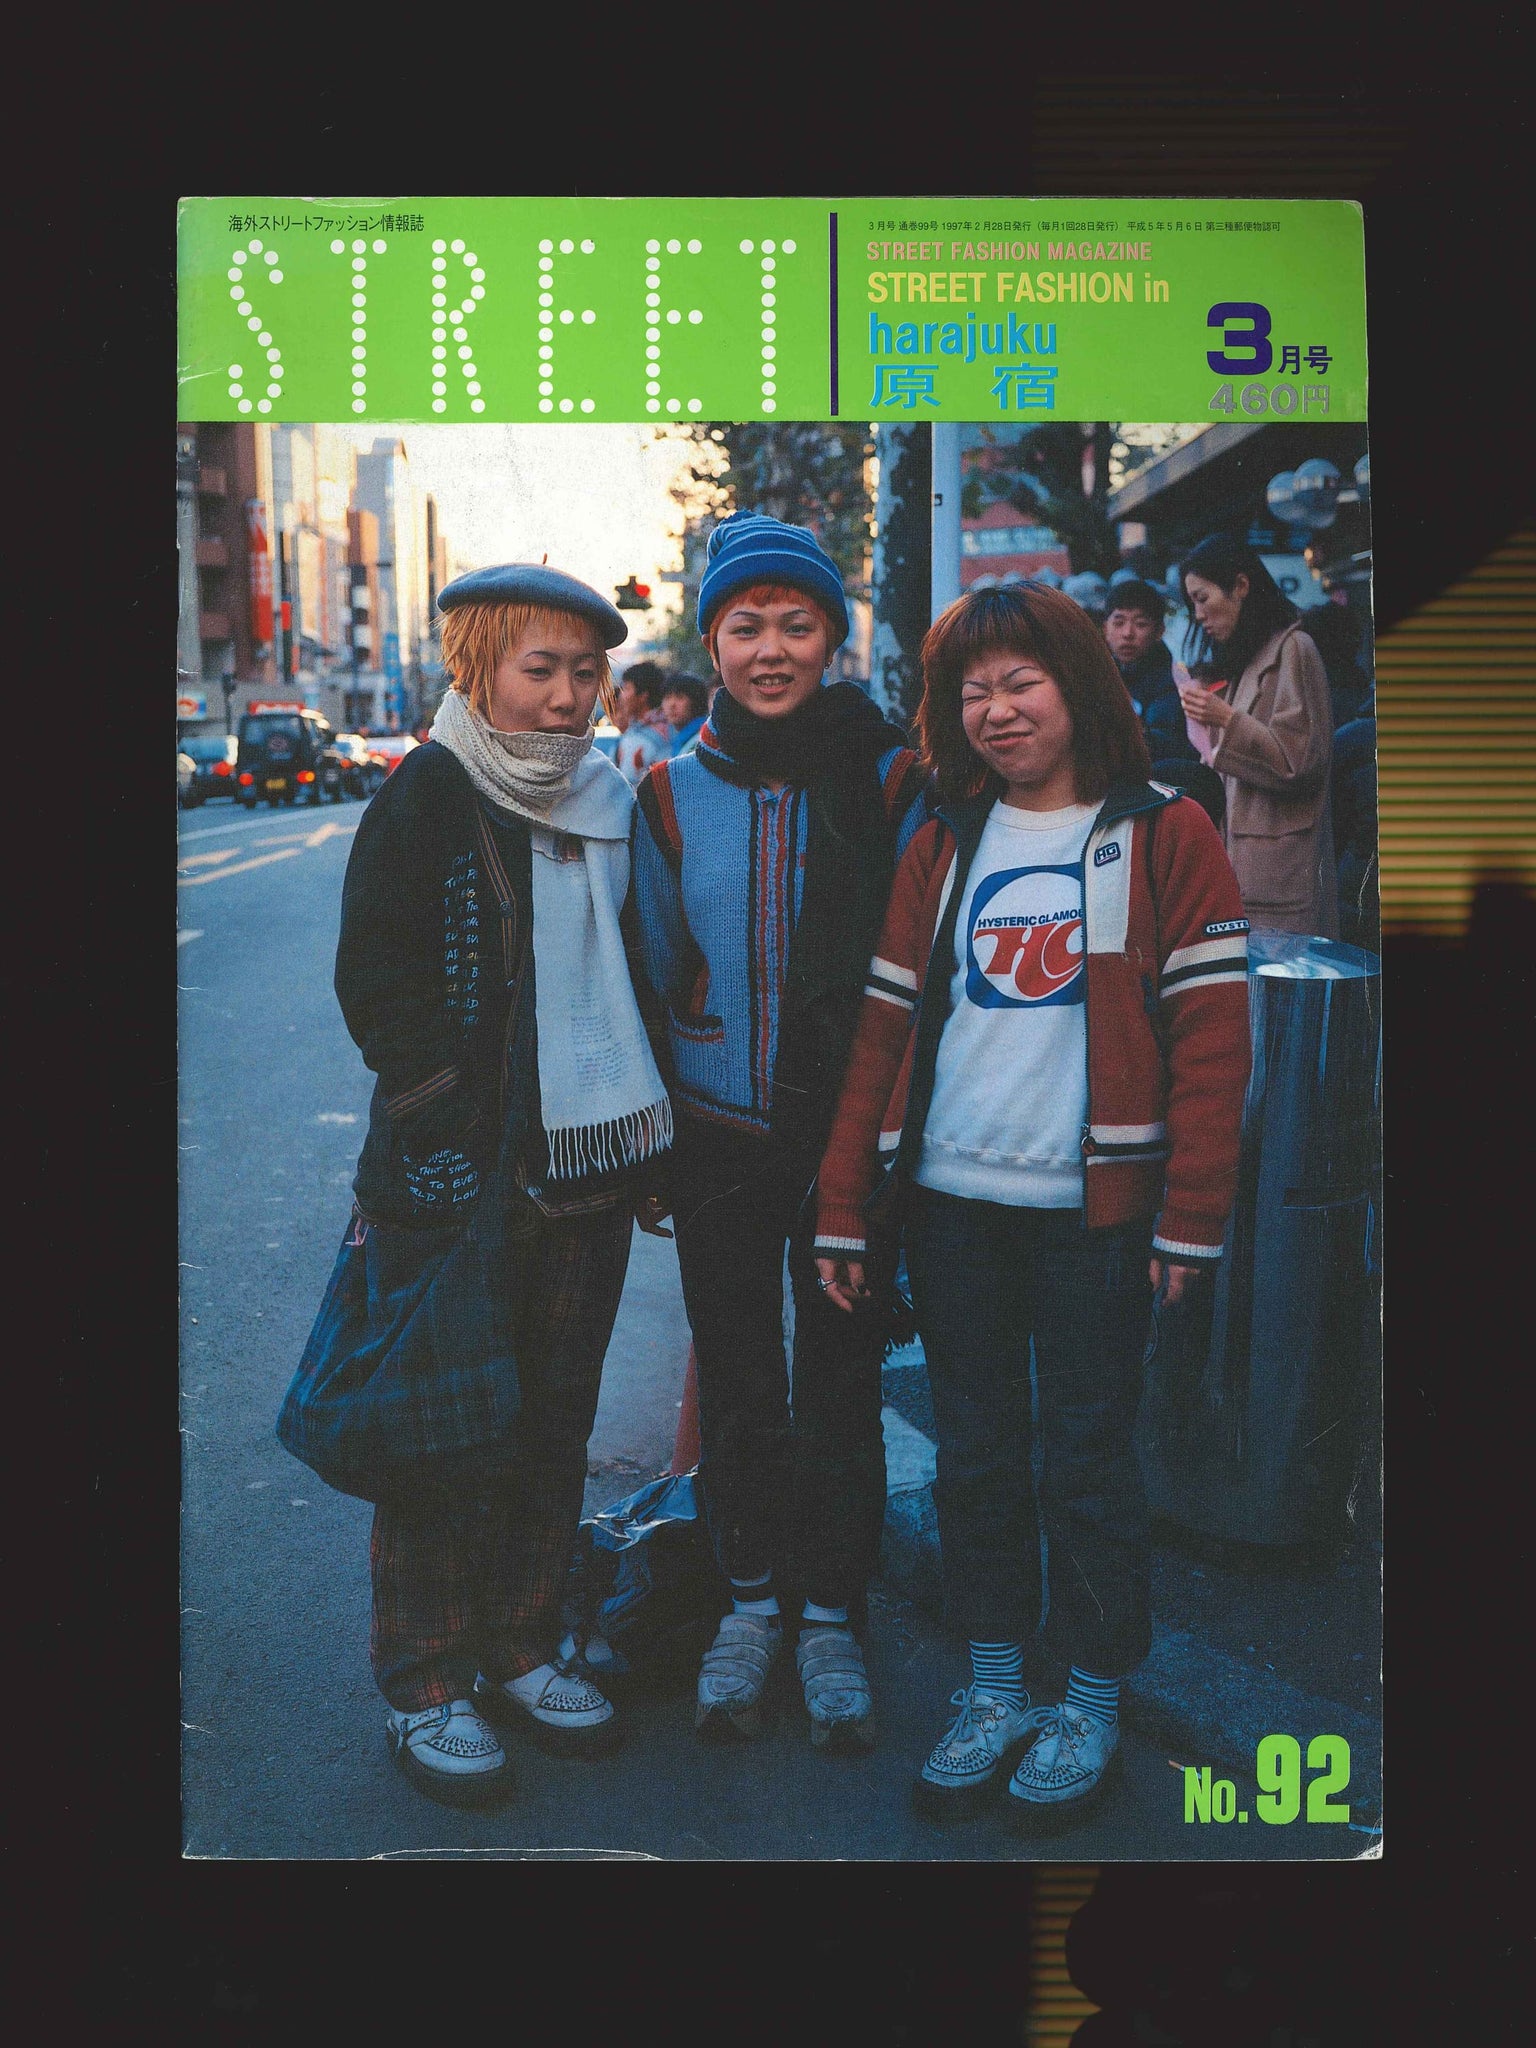 STREET magazine no. 92 / march 1997 / street fashion in harajuku / Shoichi Aoki